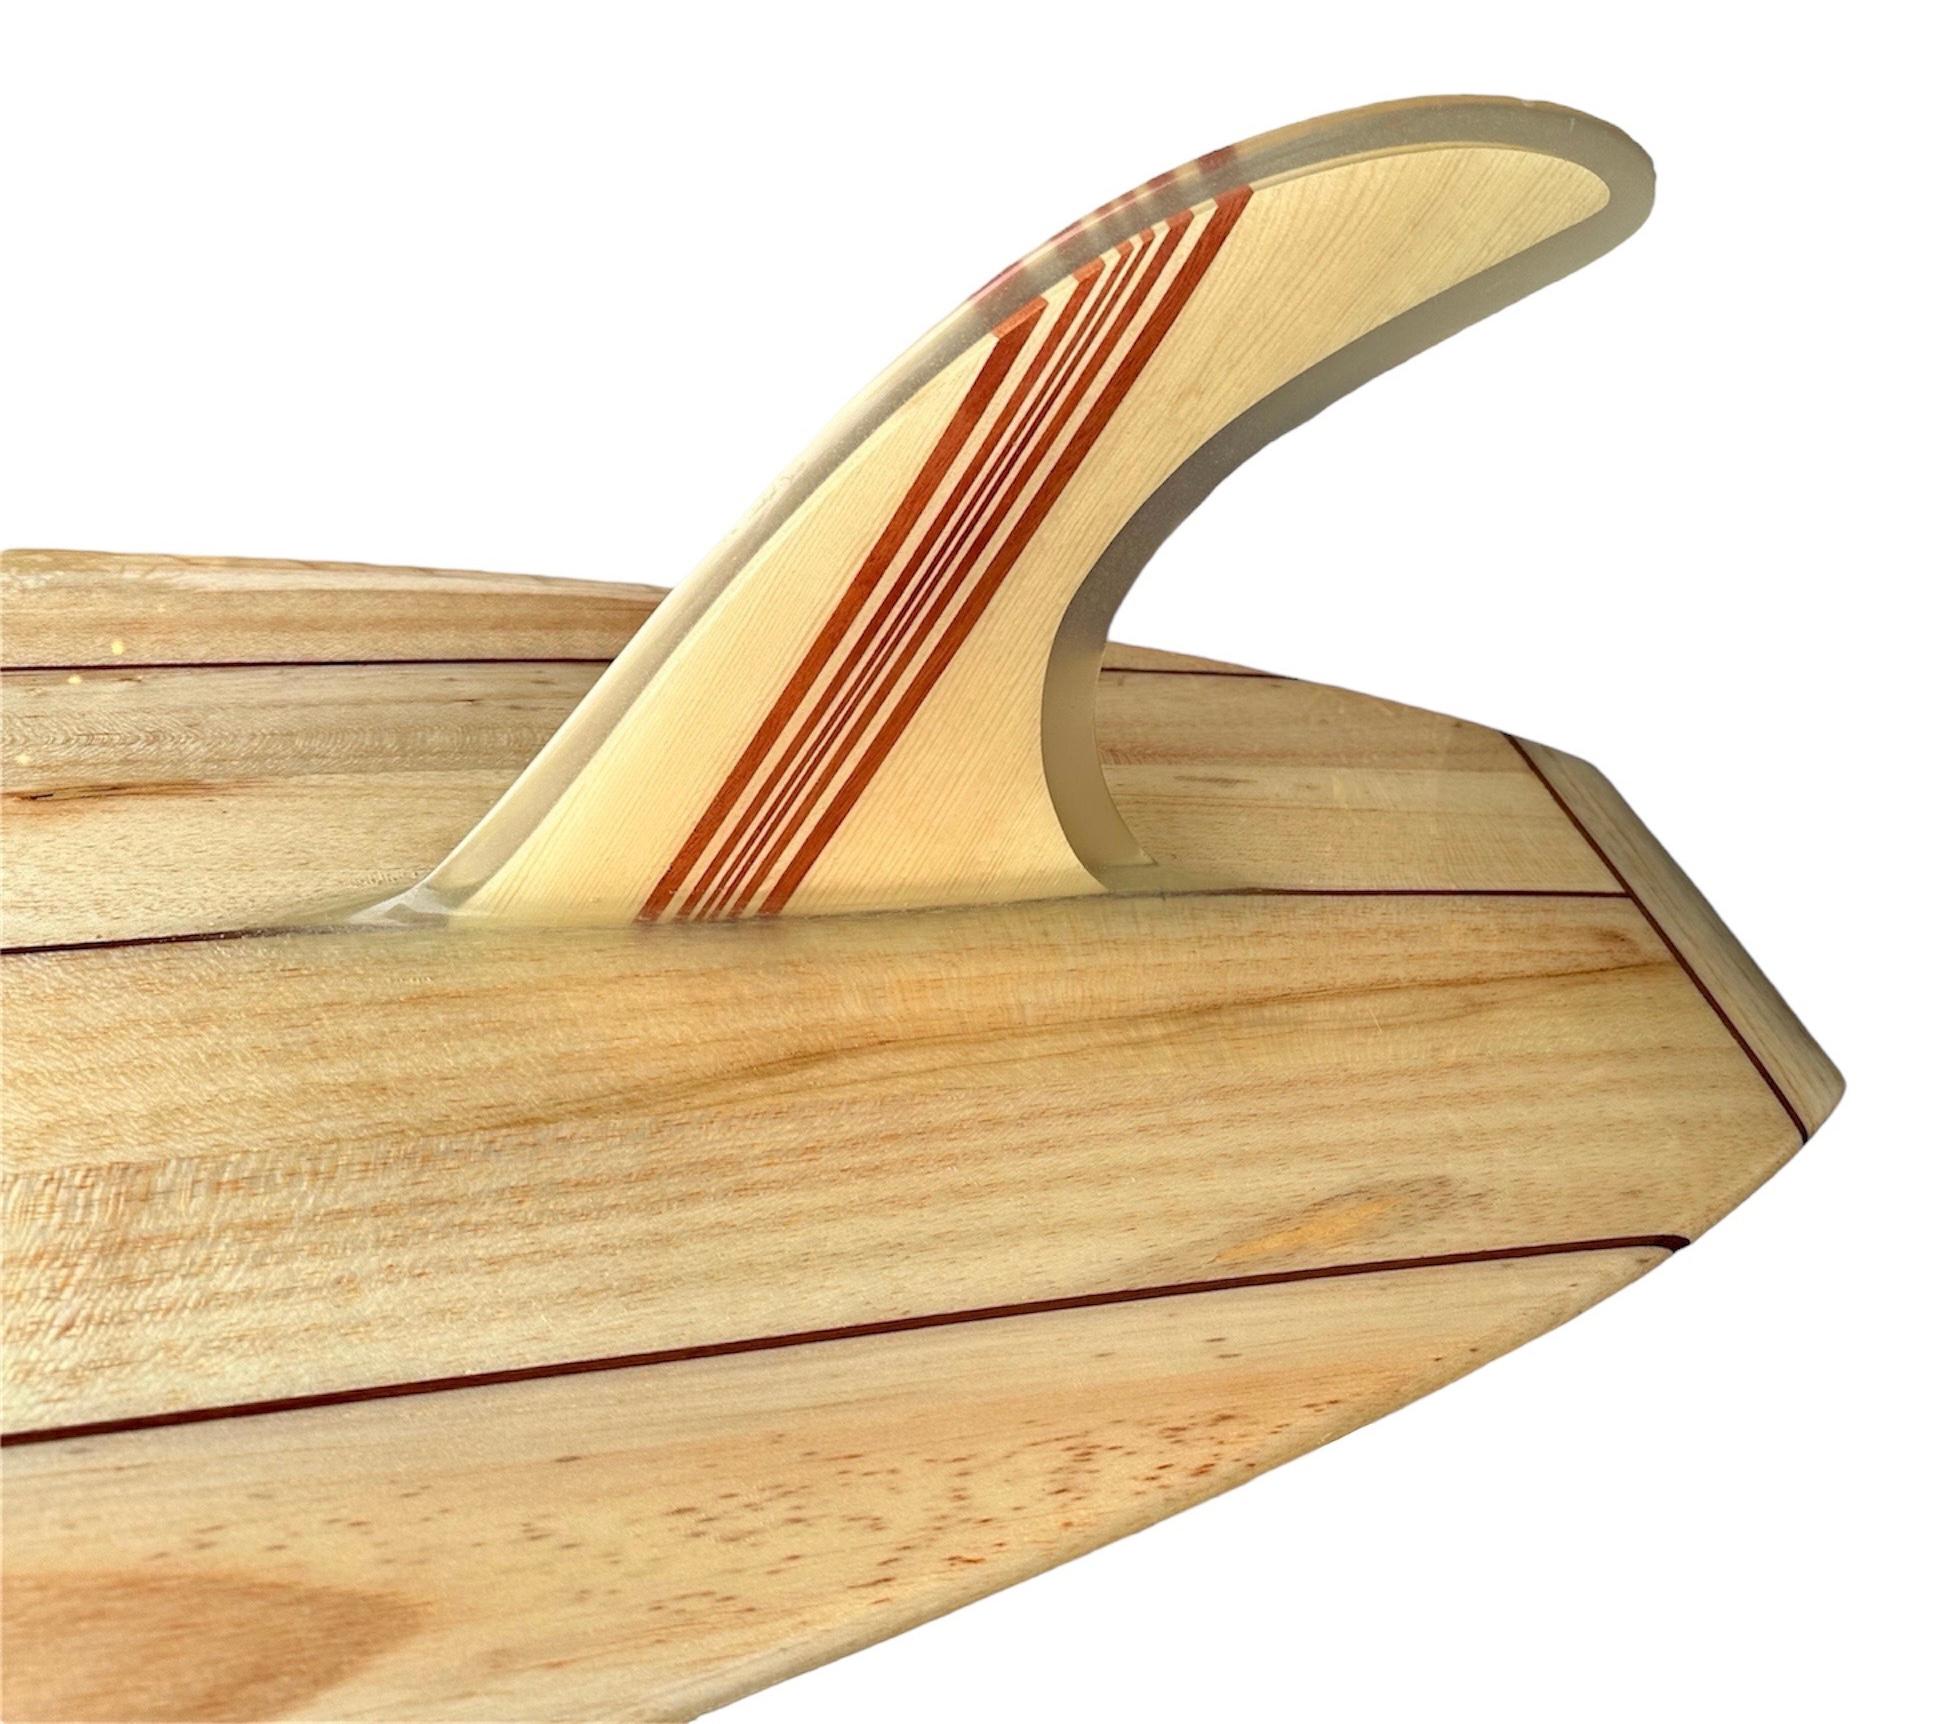 American Marc Andreini balsa wooden longboard For Sale